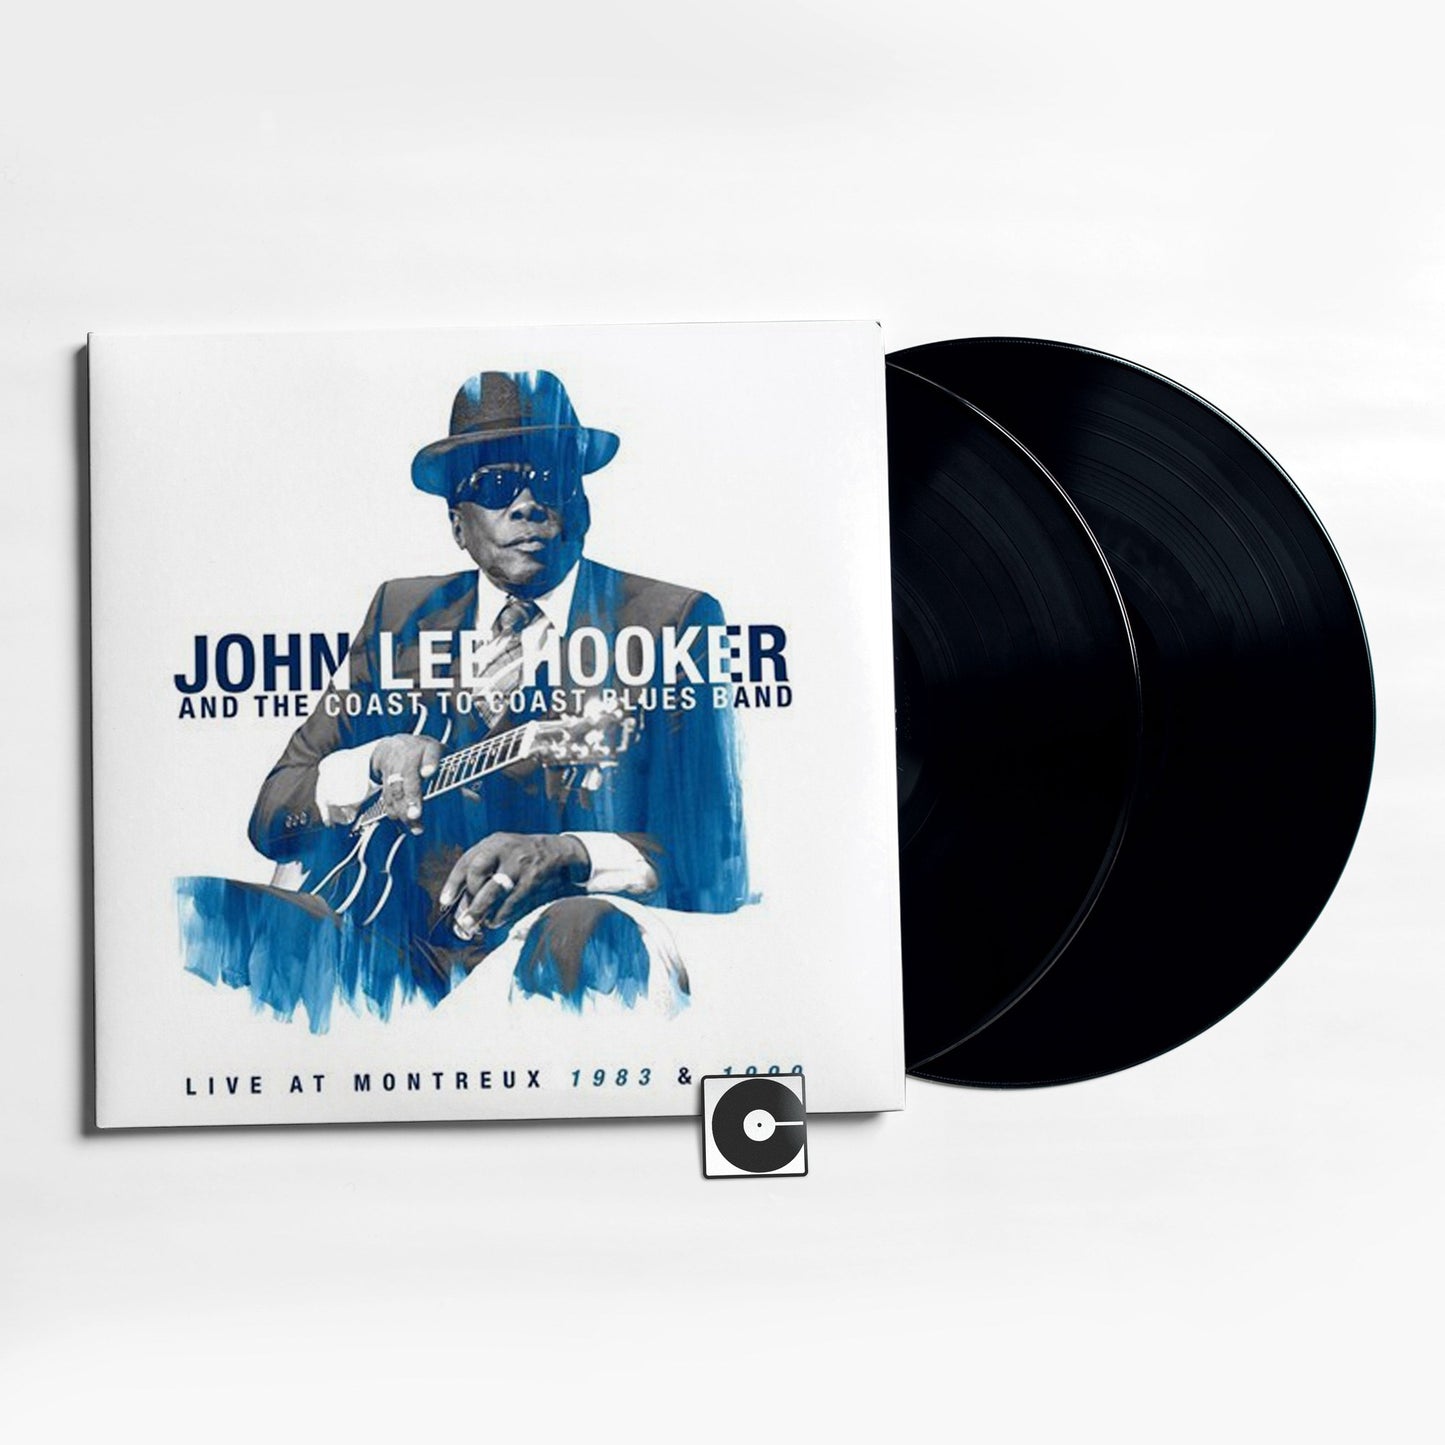 John Lee Hooker - "John Lee Hooker And The Coast To Coast Band: Live At Montreal 1983 & 1990"